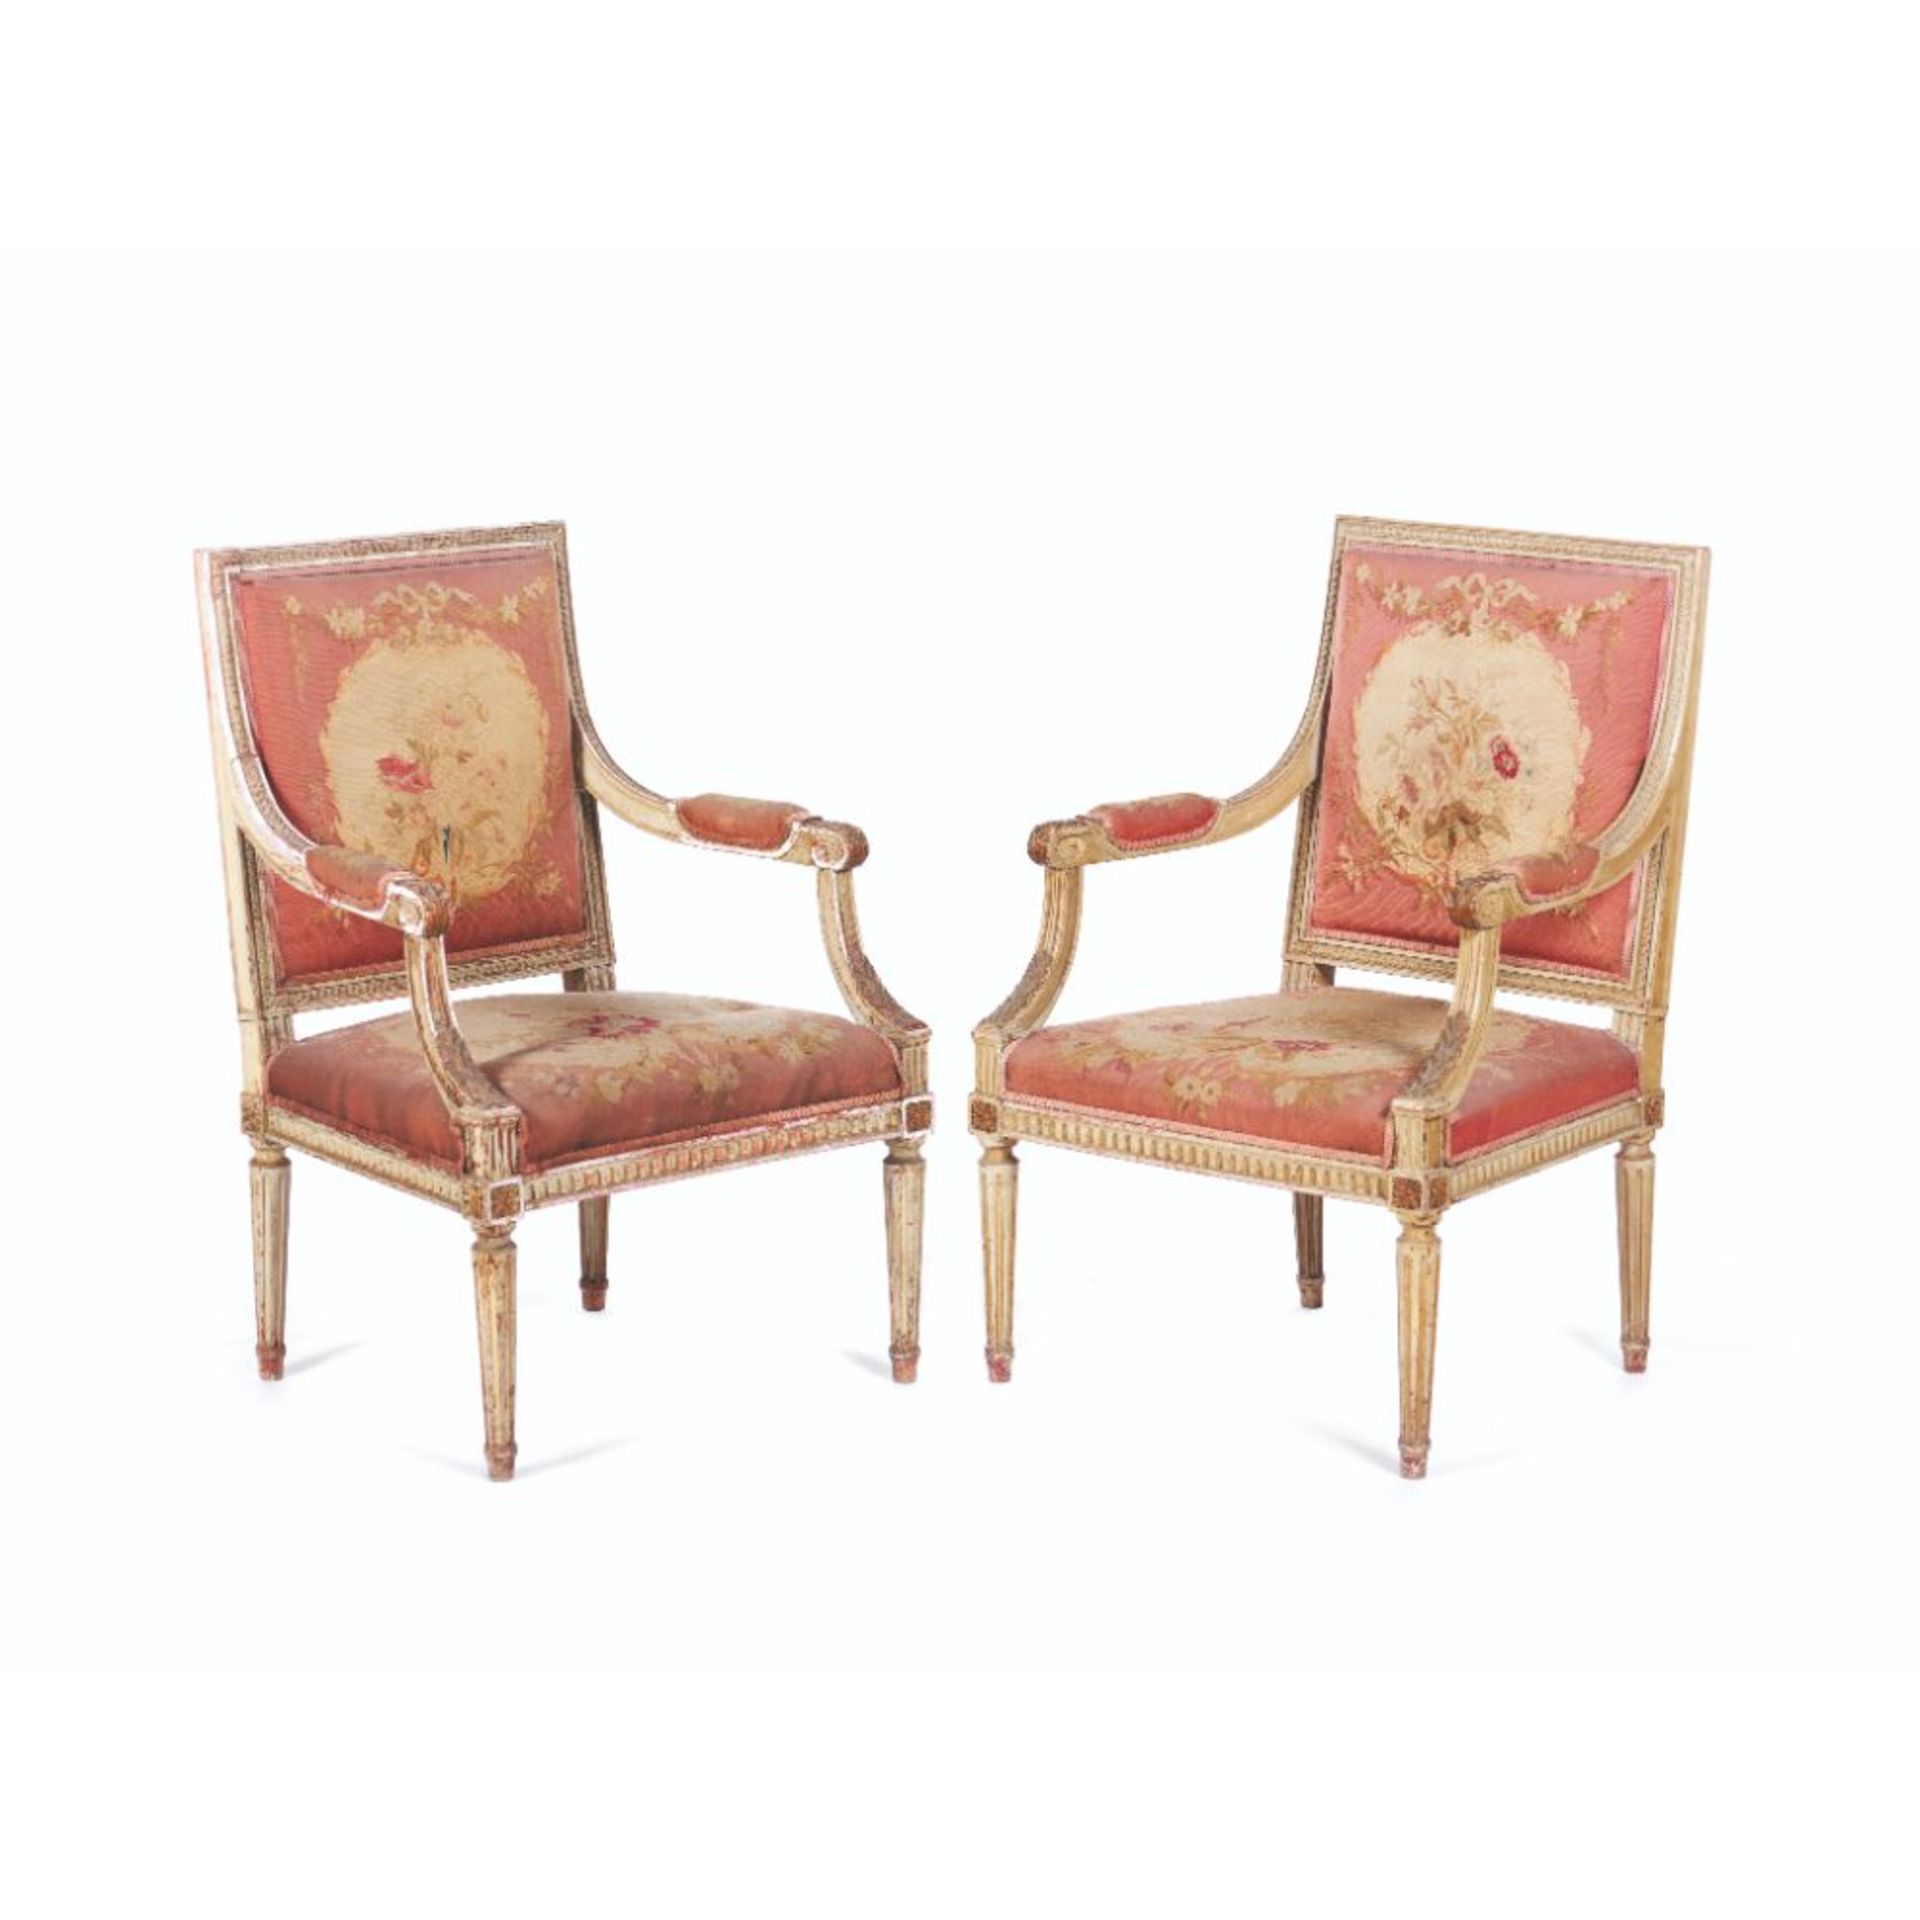 A pair of Louis XVI style fauteuils